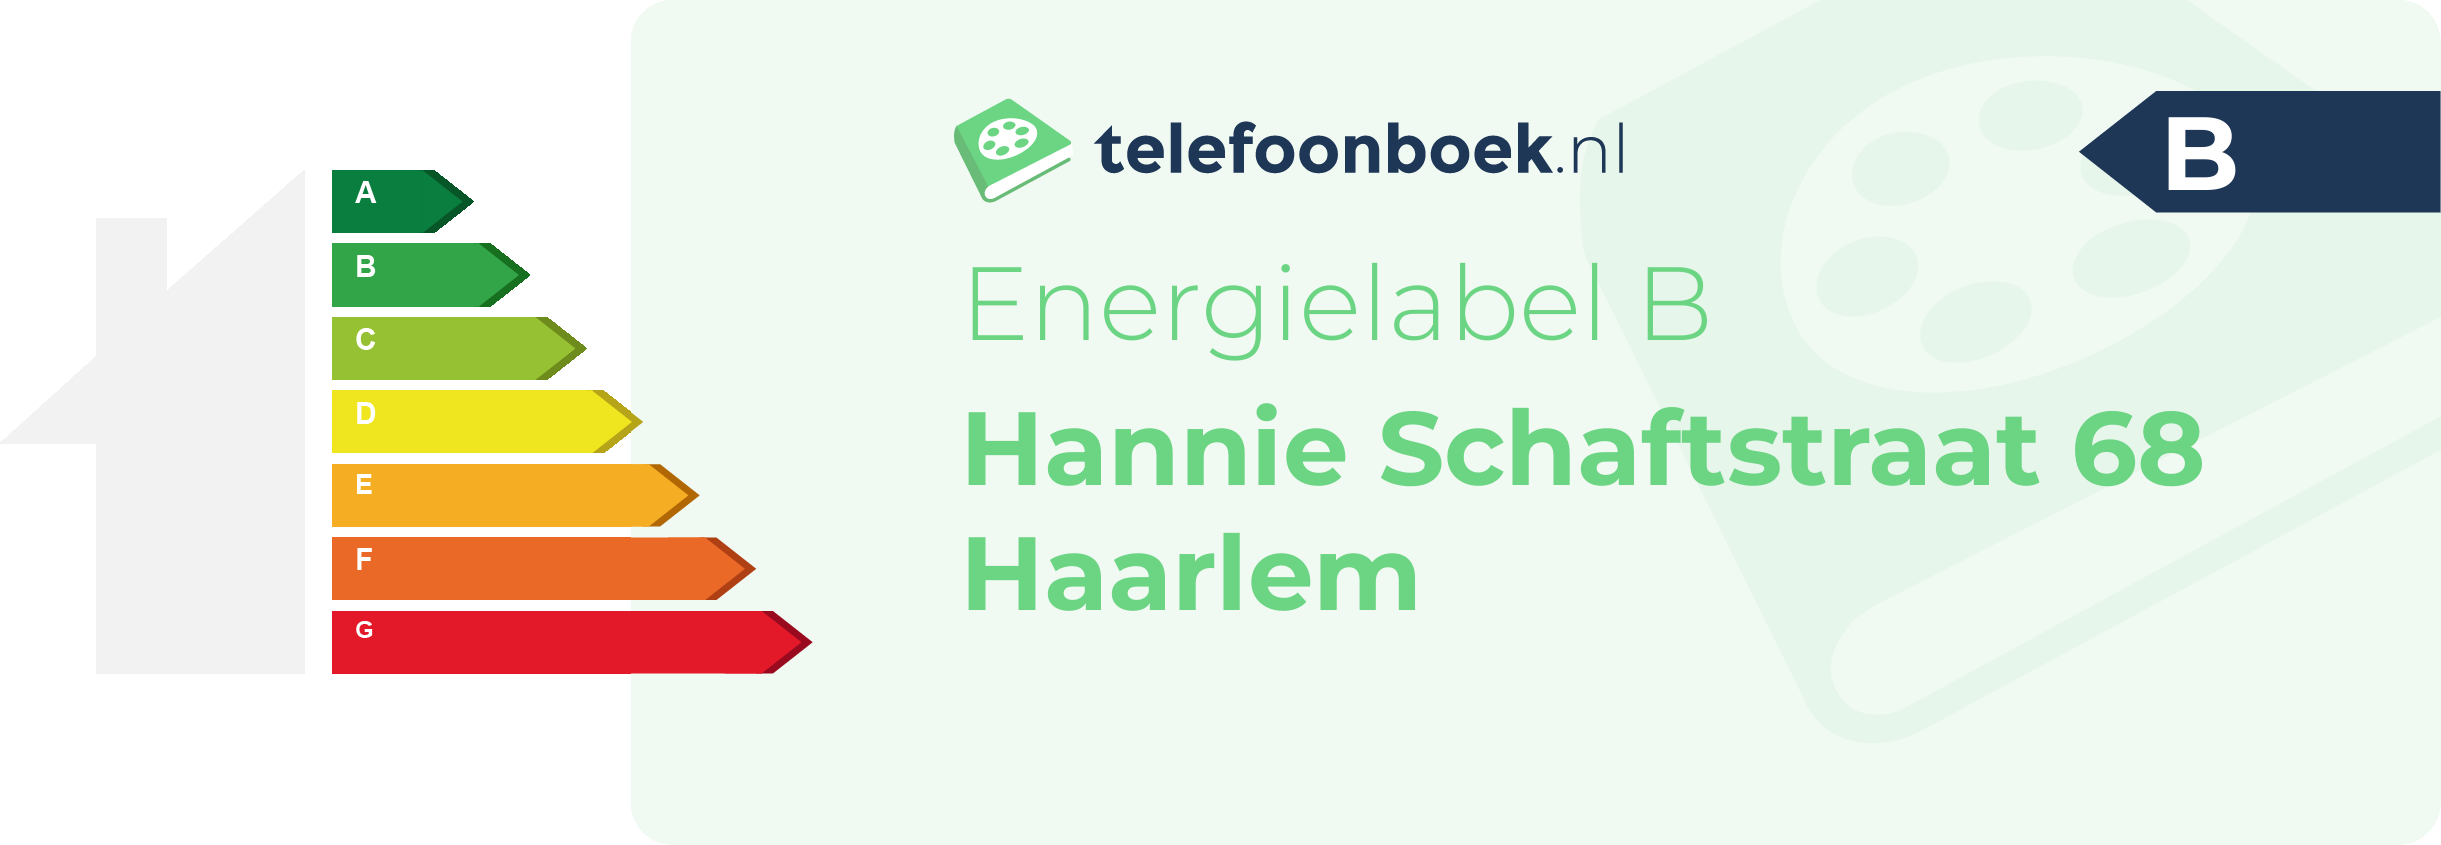 Energielabel Hannie Schaftstraat 68 Haarlem